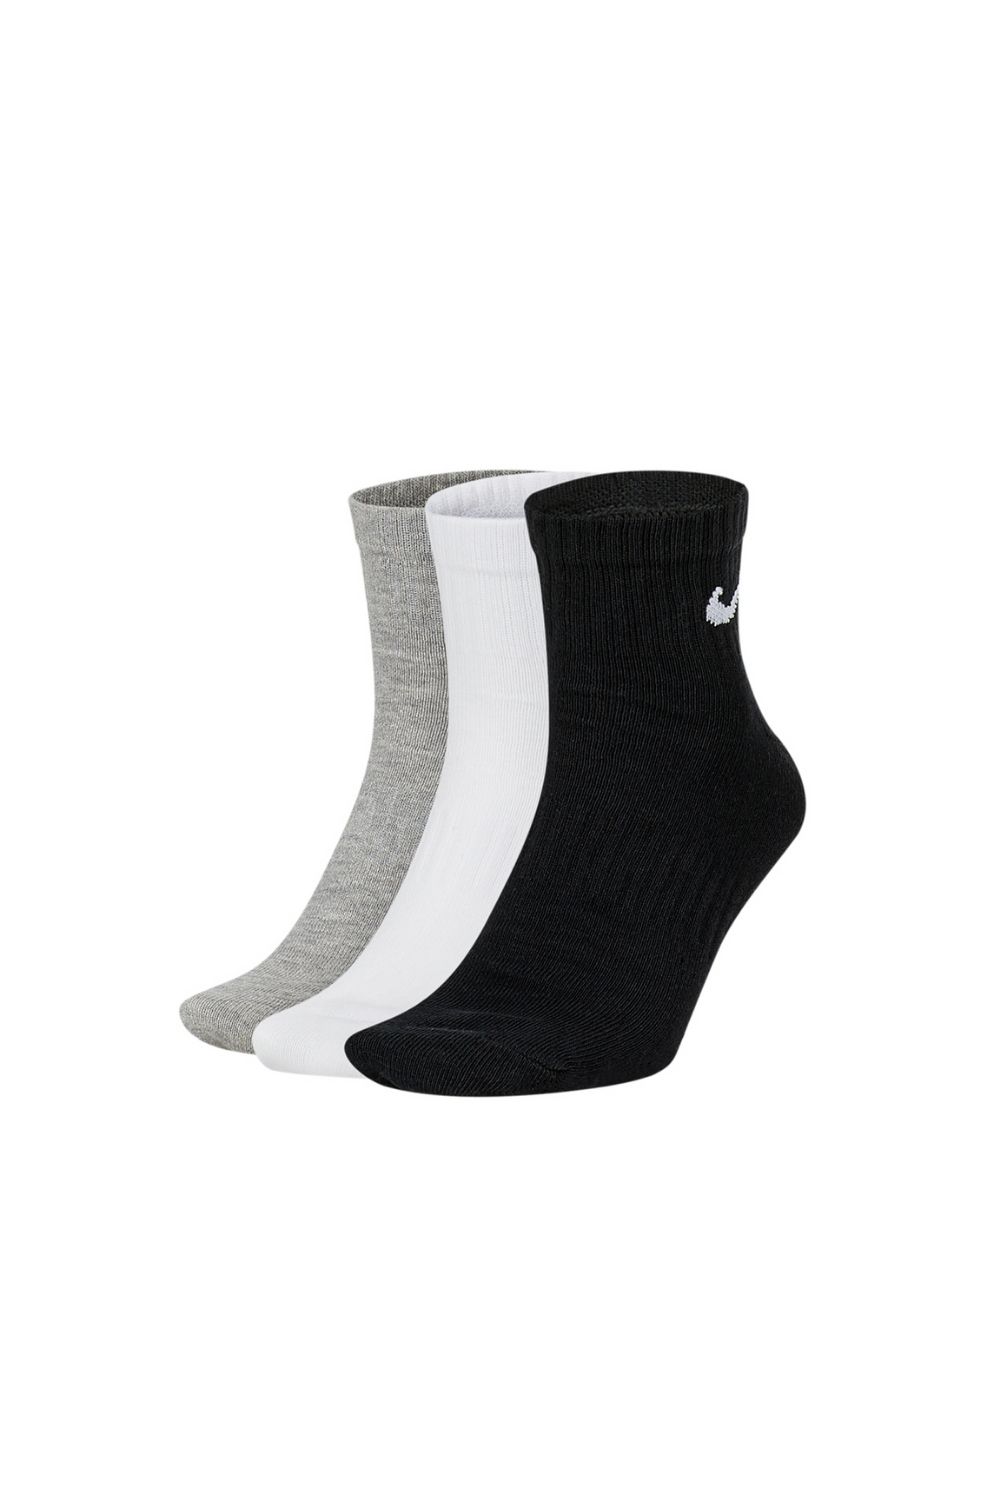 NIKE – Σετ από 3 ζευγάρια κάλτσες NIKE μαύρες-γκρι-λευκές 1691264.1-0201